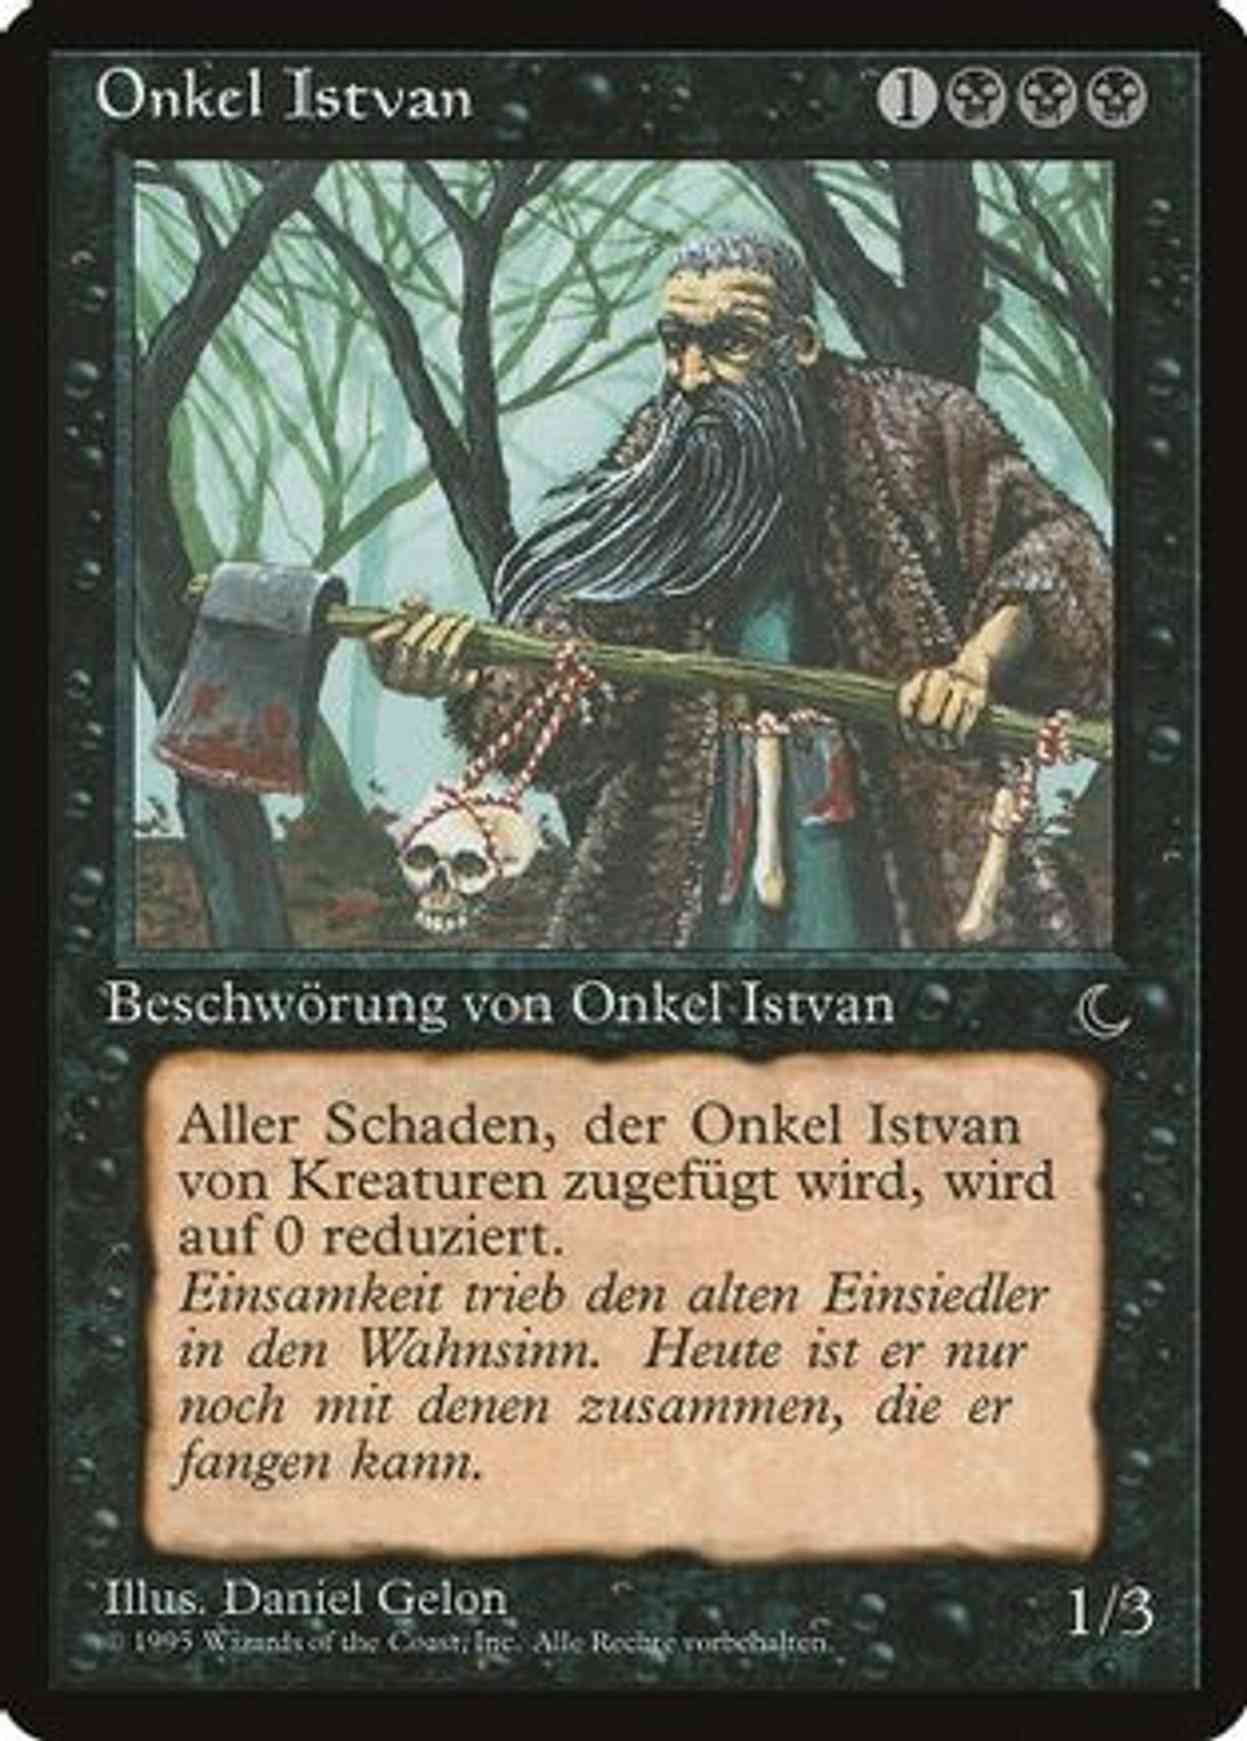 Uncle Istvan (German) - "Onkel Istvan" magic card front